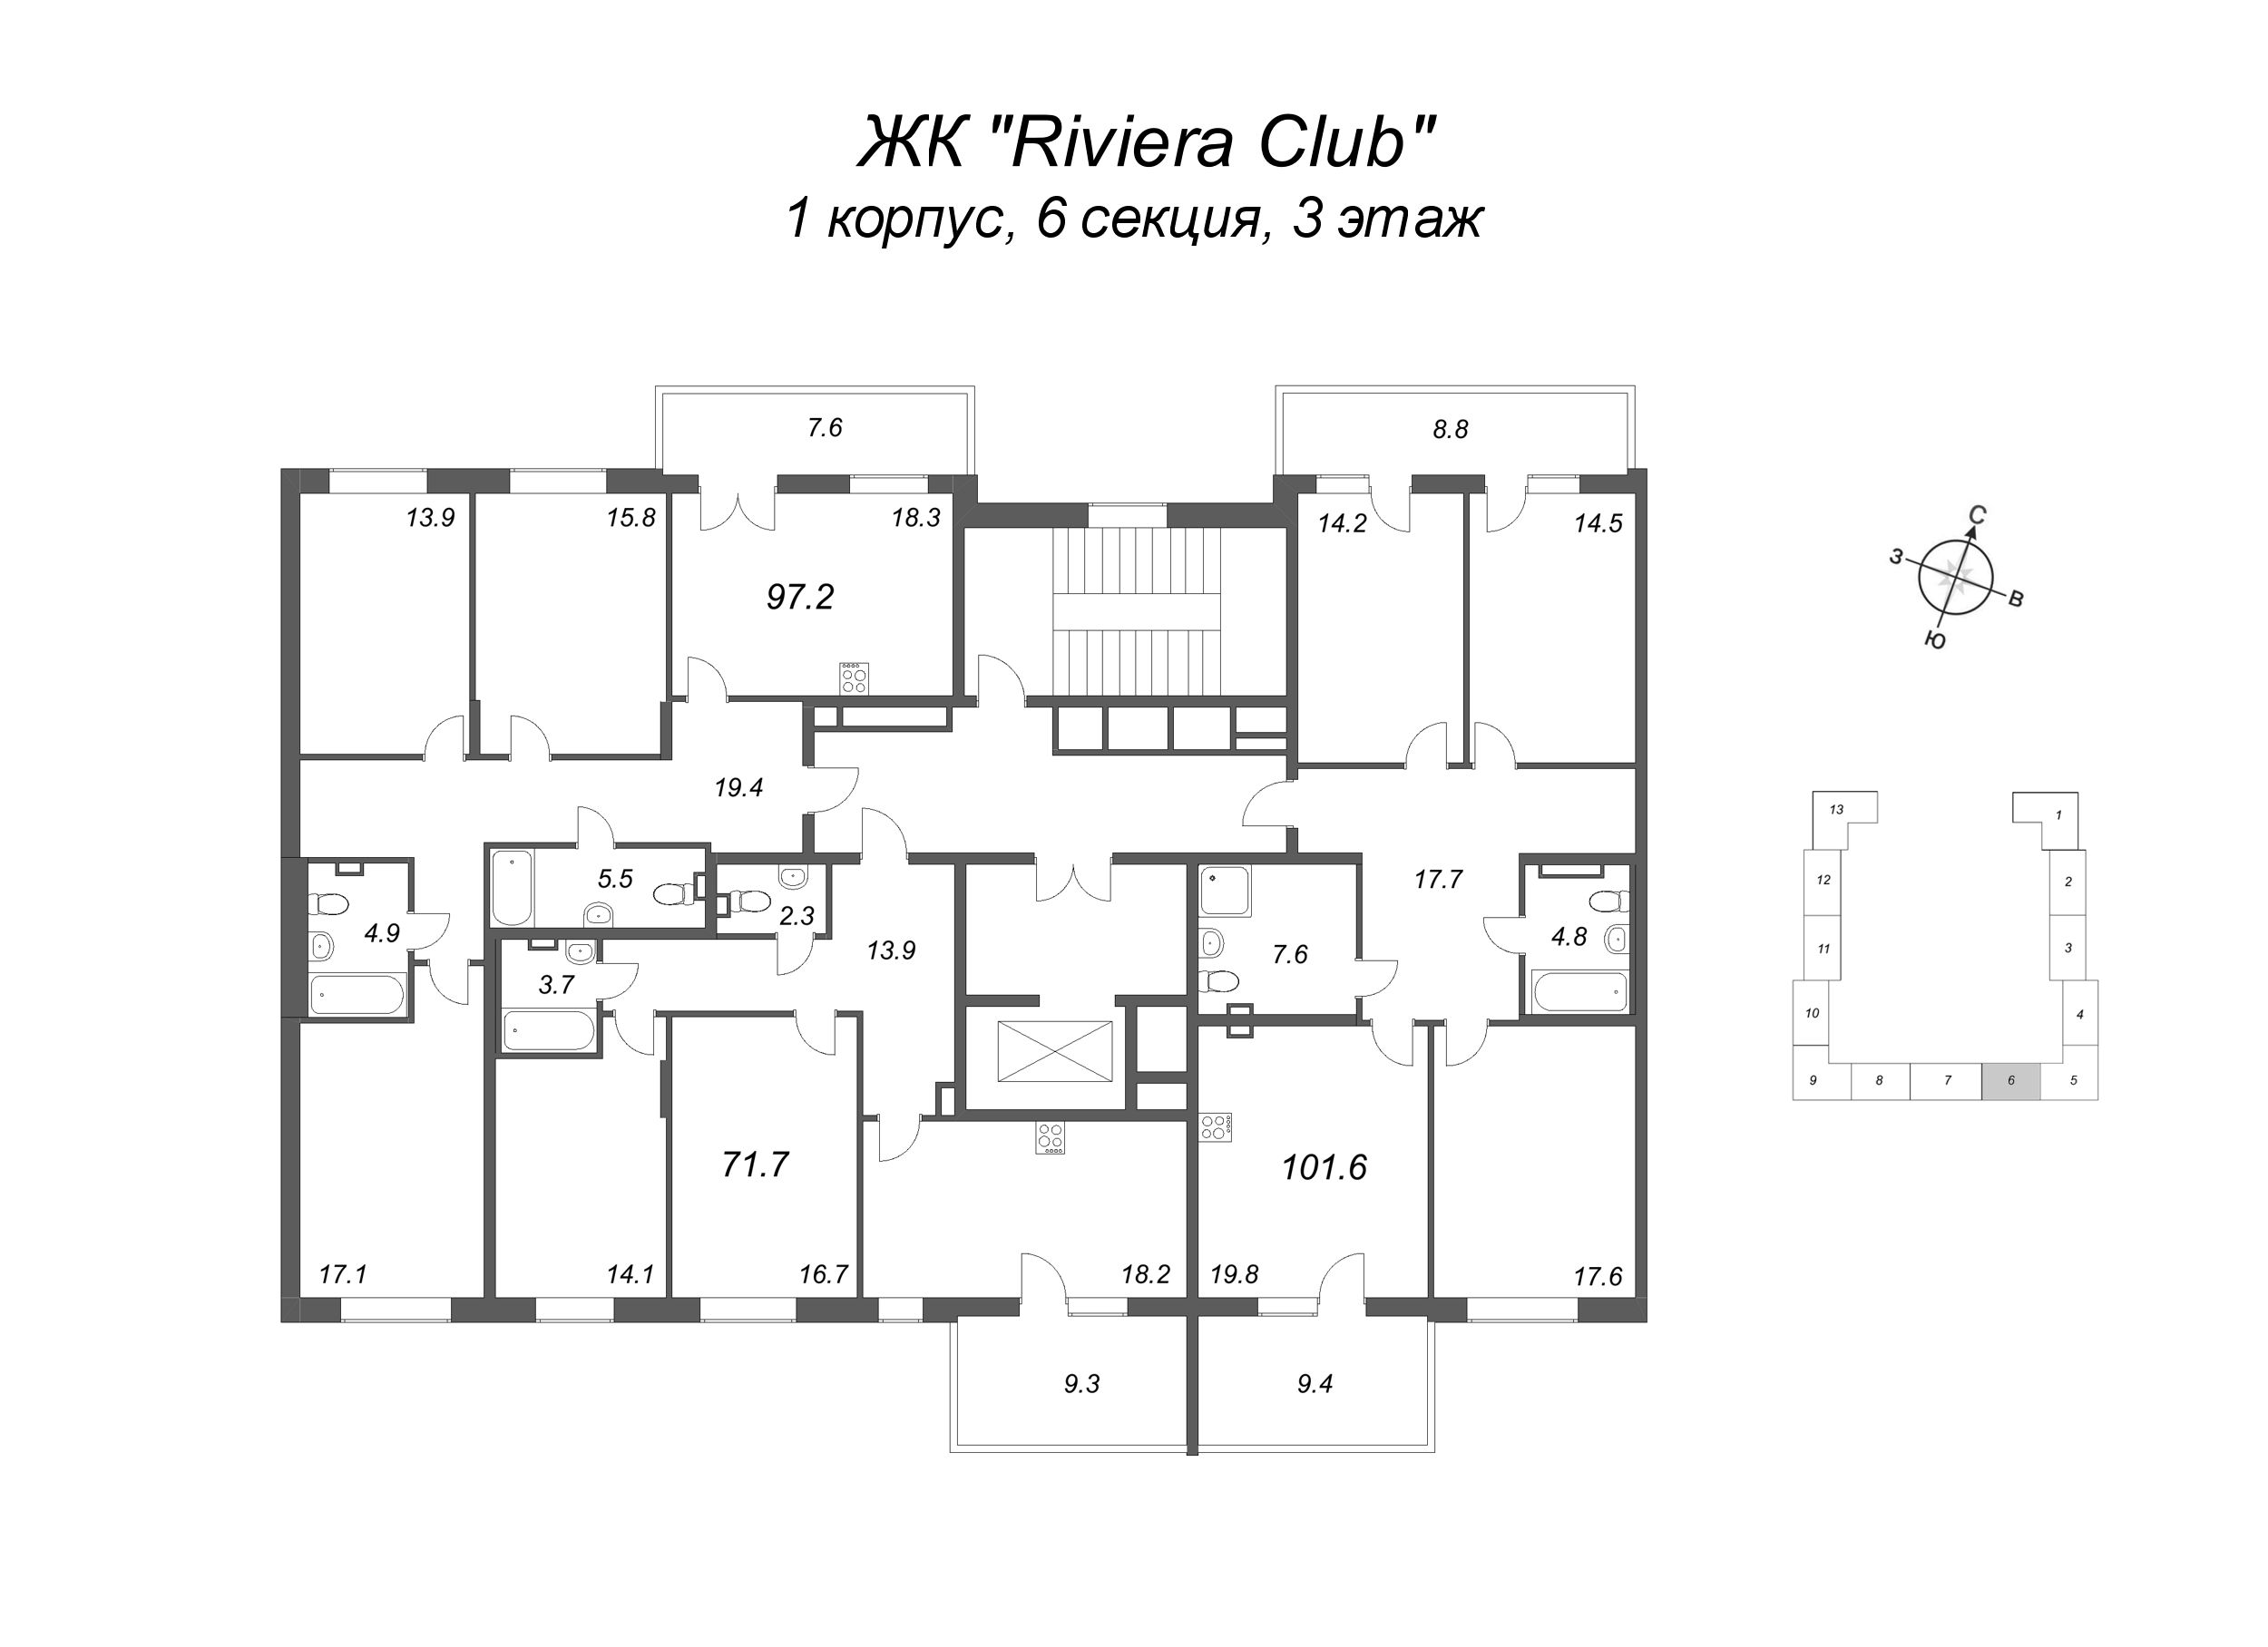 3-комнатная (Евро) квартира, 71.7 м² в ЖК "Riviera Club" - планировка этажа